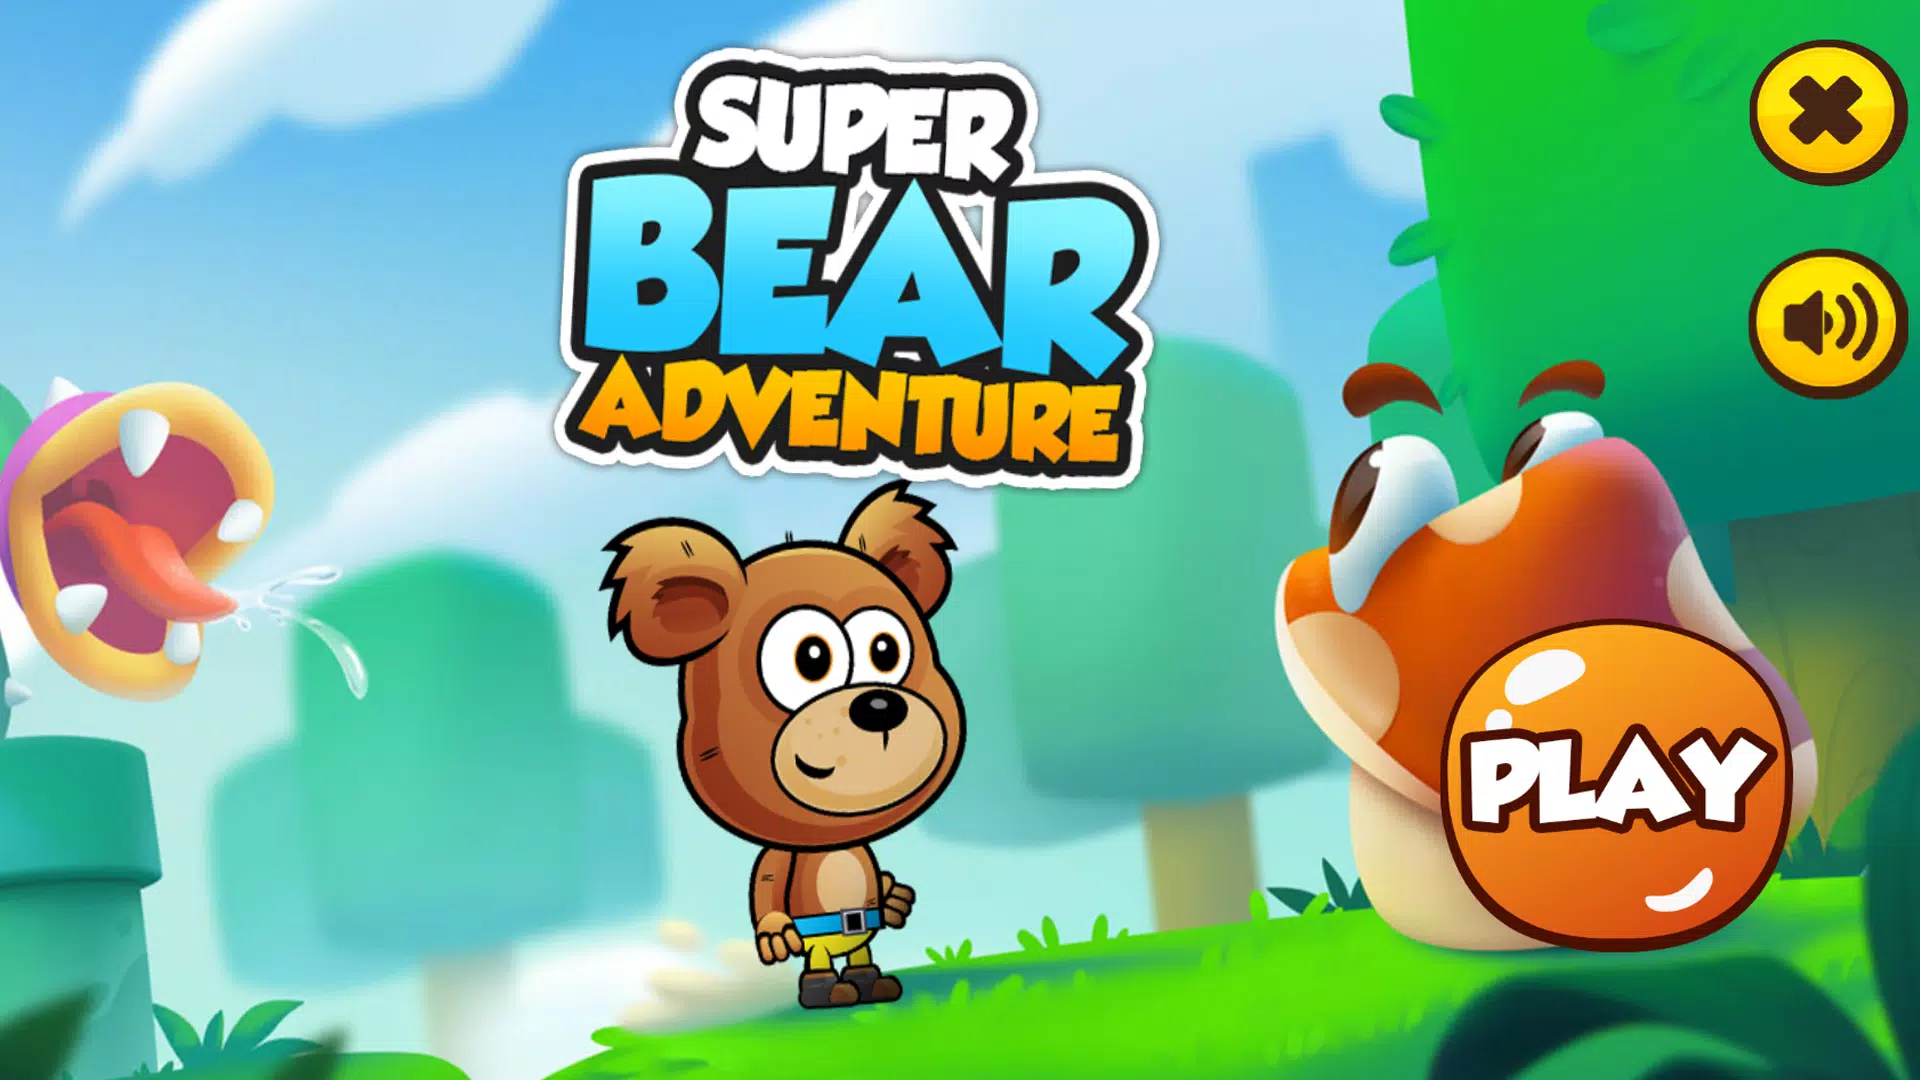 Super Bear Adventure APK v1.6.3 Free Download - APK4Fun